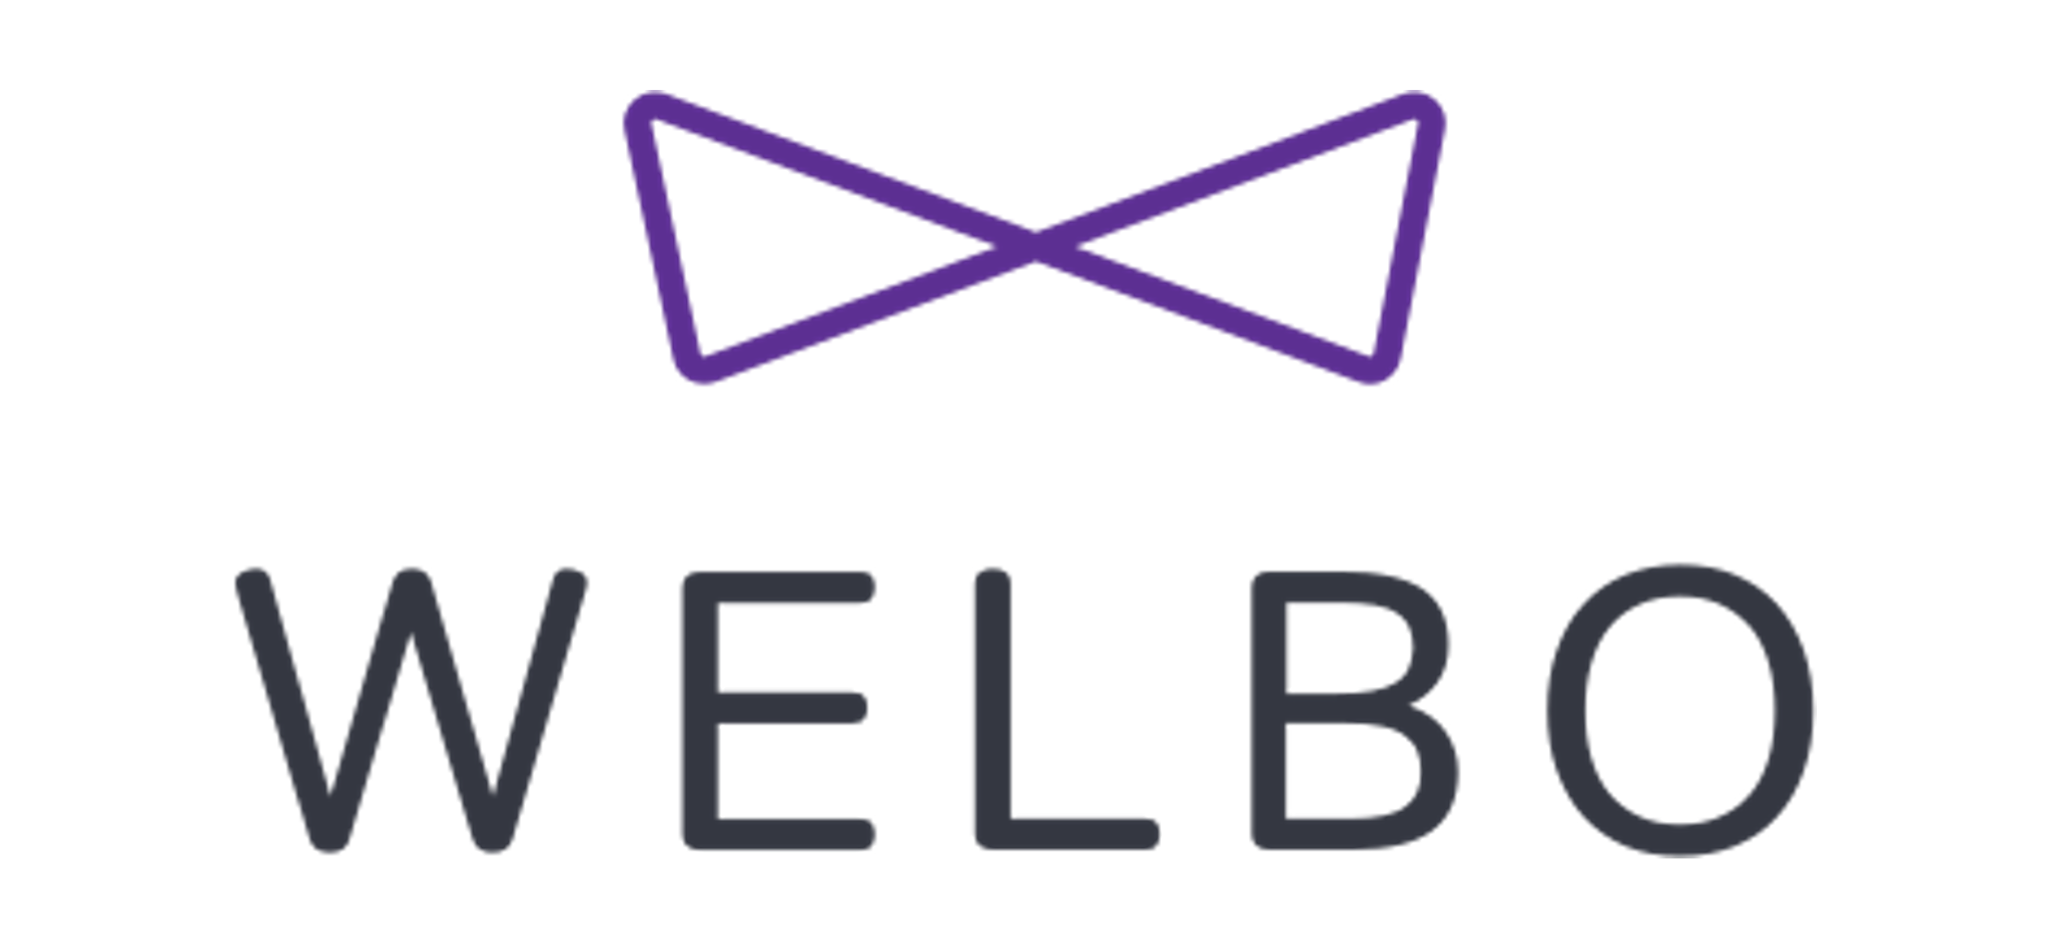 Welbo logo